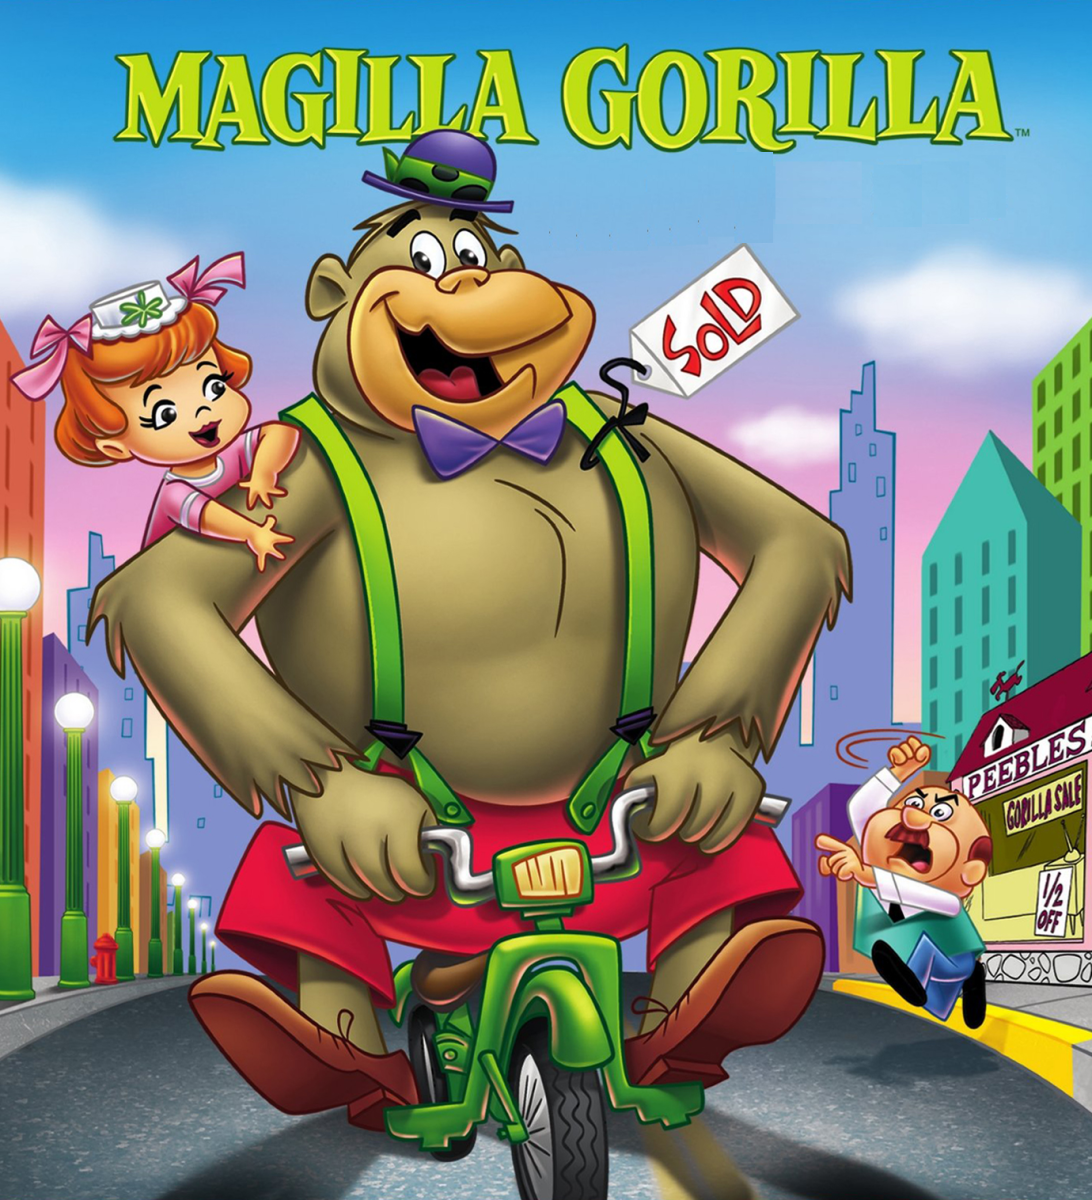 "Magilla Gorilla" was produced alongside its very own toyline. 